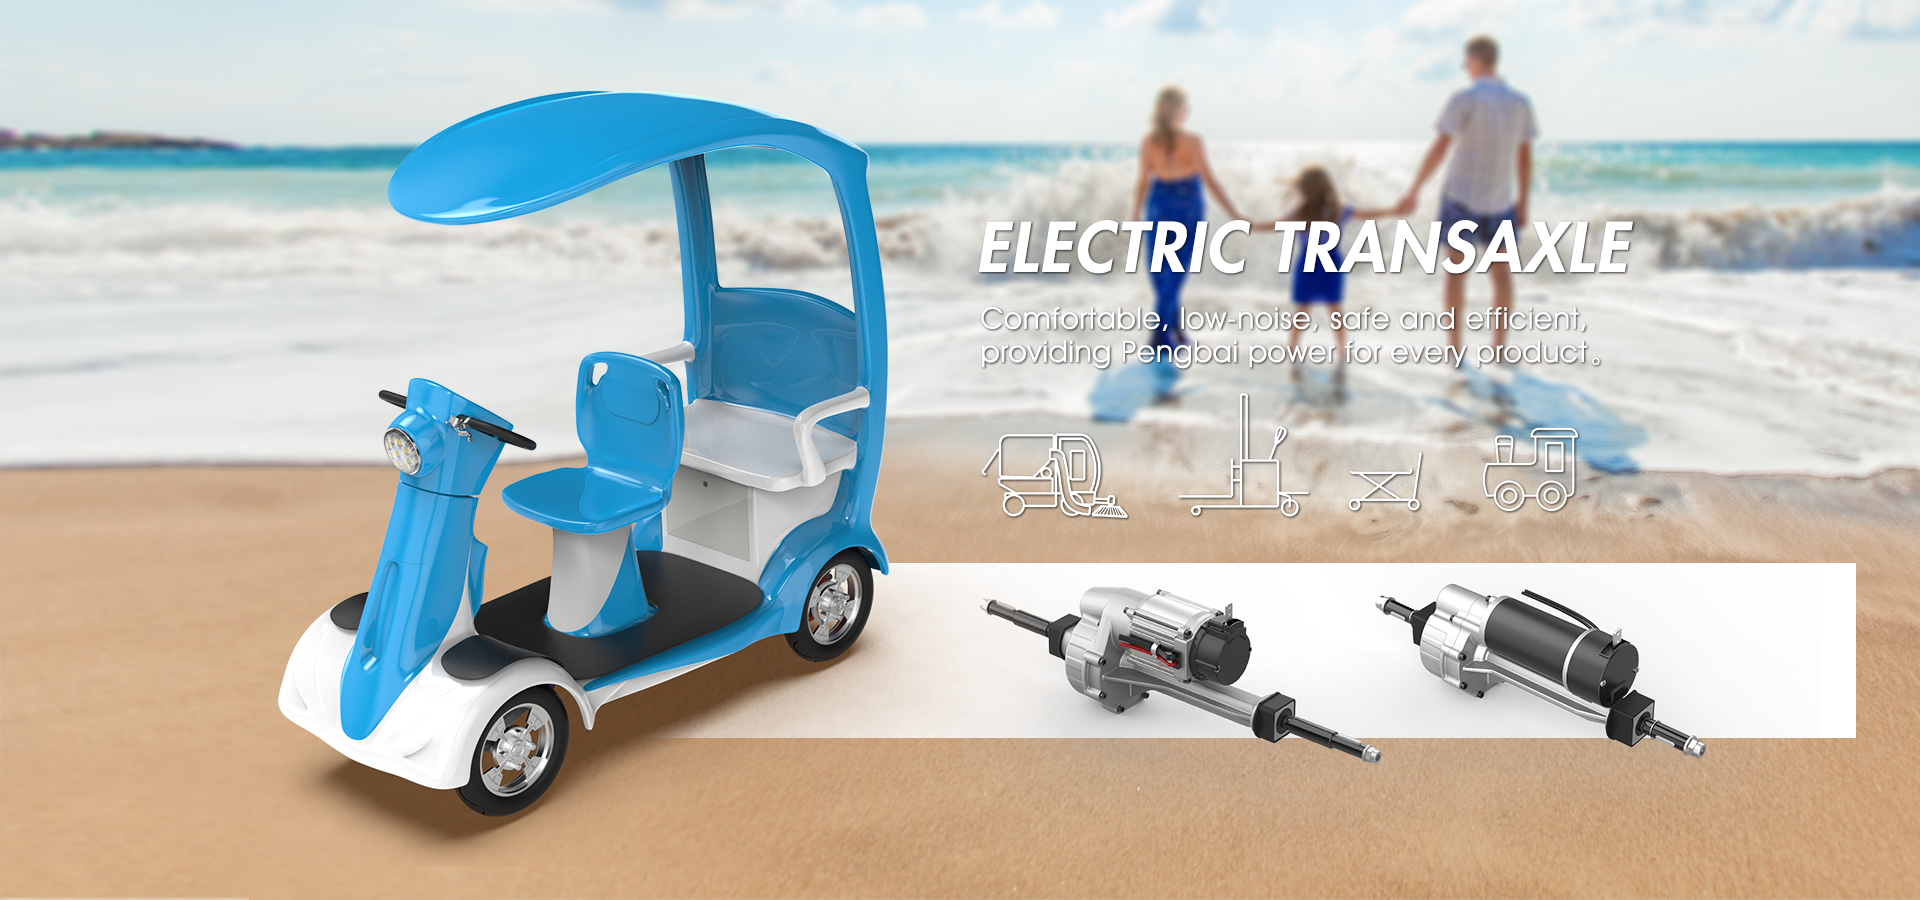 Electcic vehicle transmission